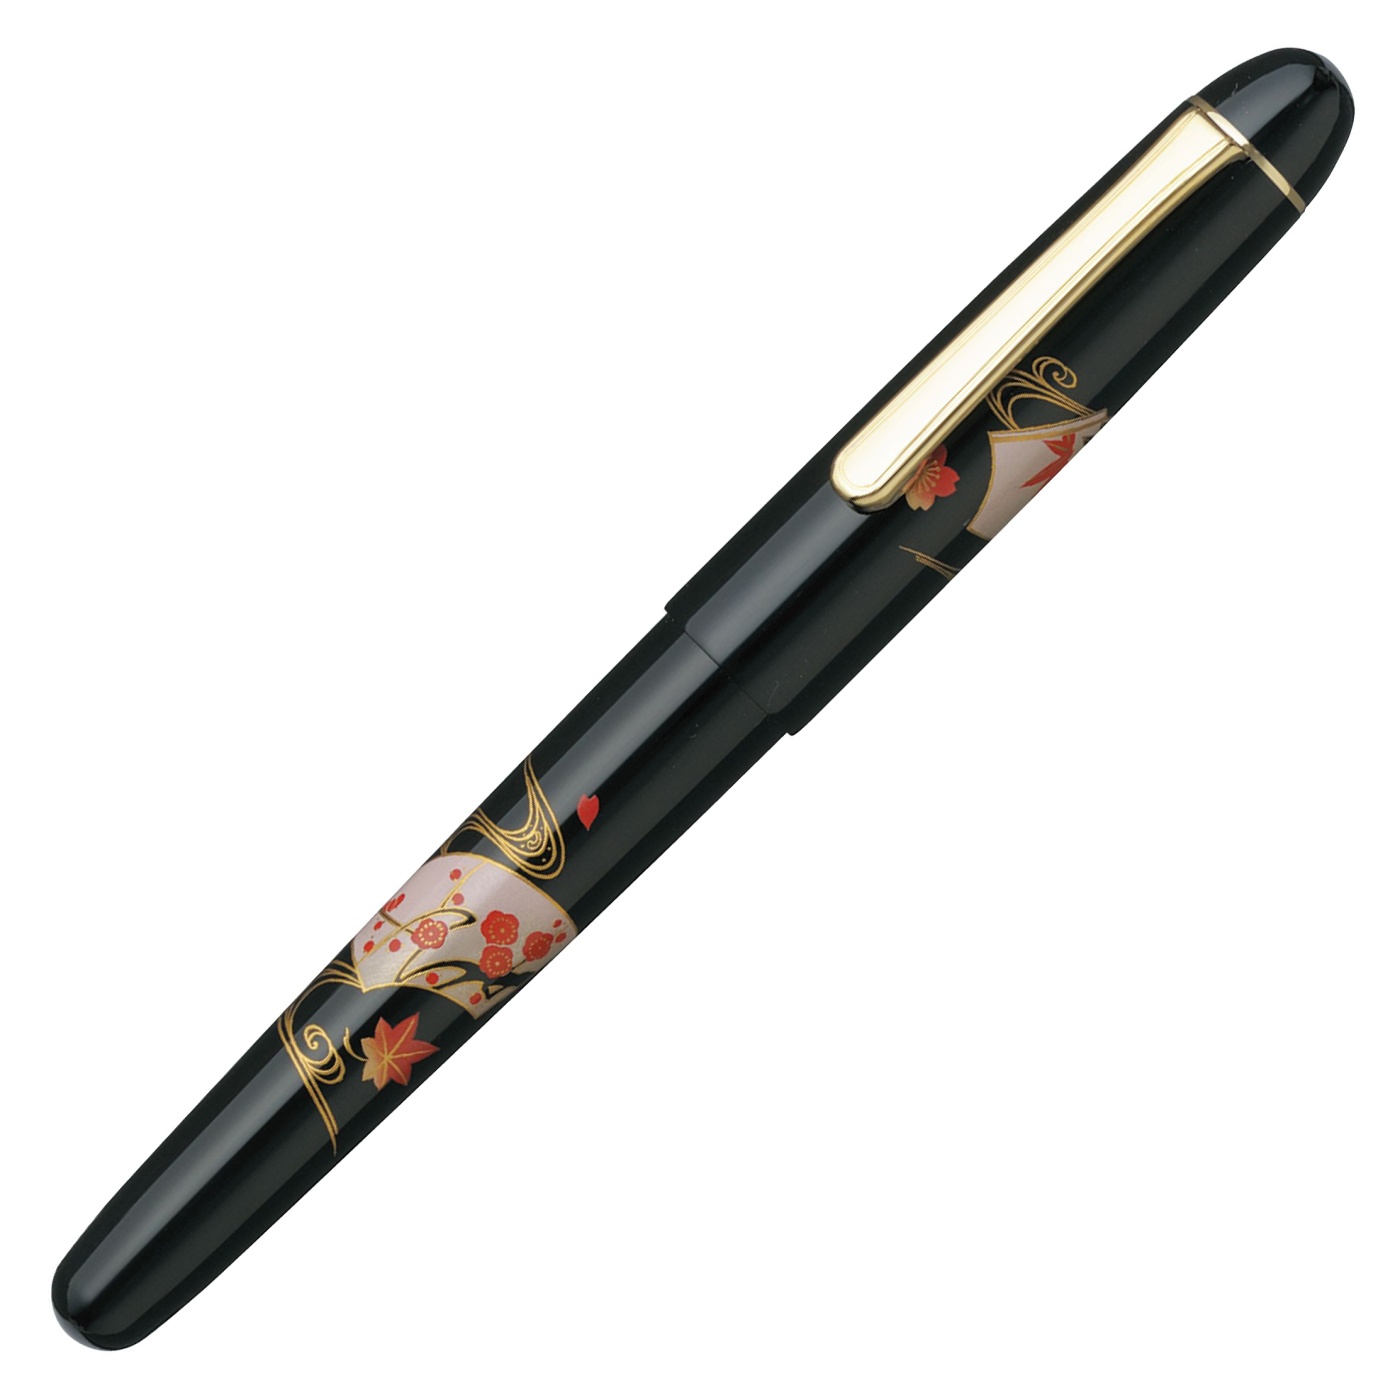 Kaga' Hira Maki-e Fountain pen Semmen in the group Pens / Fine Writing / Fountain Pens at Pen Store (109852_r)